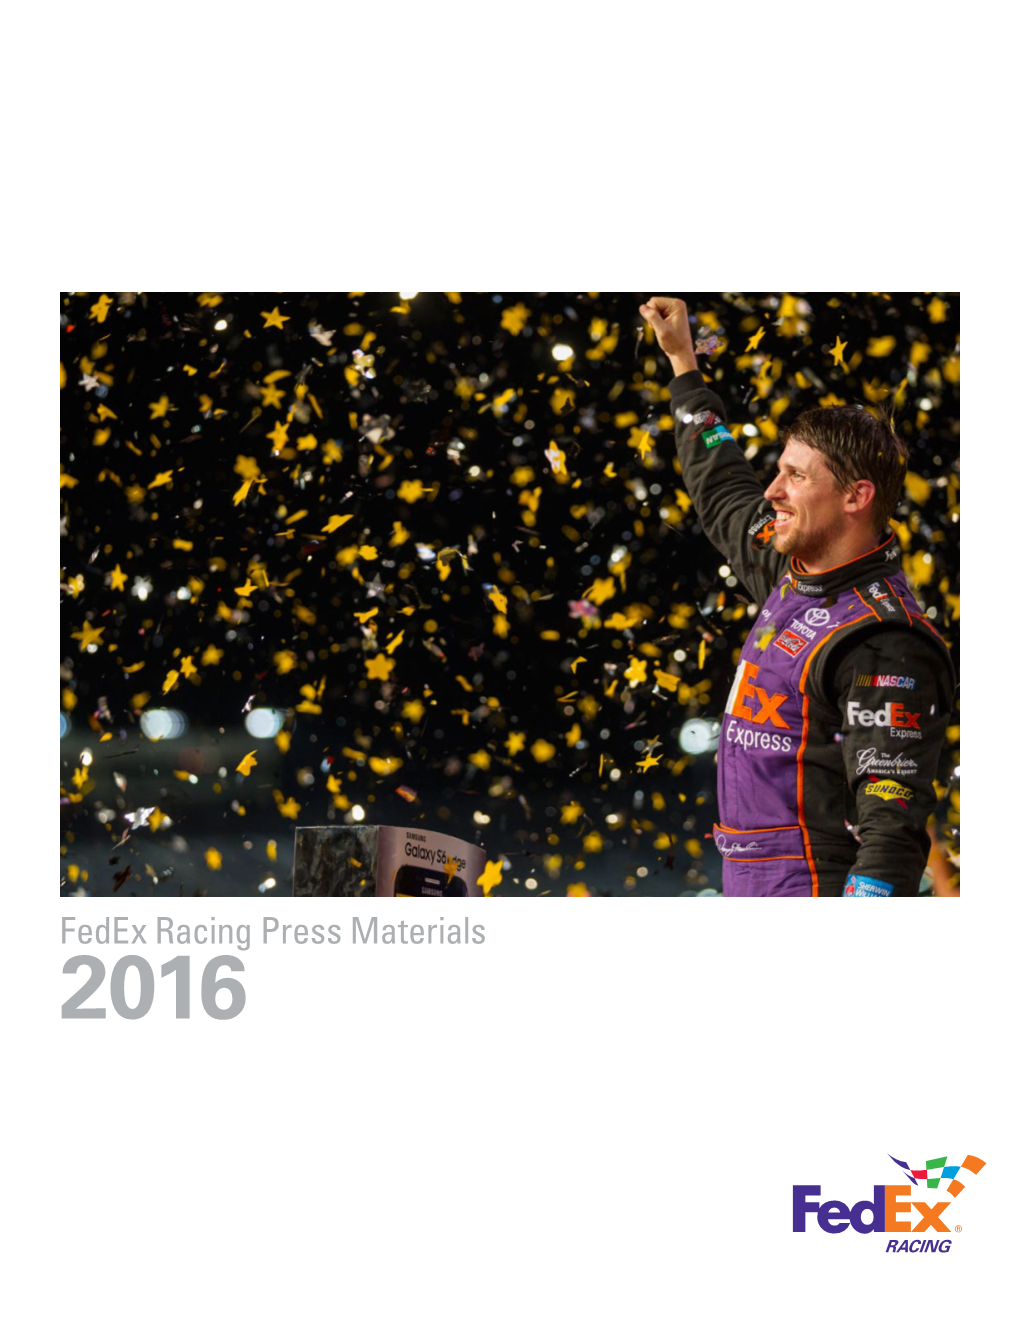 Fedex Racing Press Materials 2016 Corporate Overview